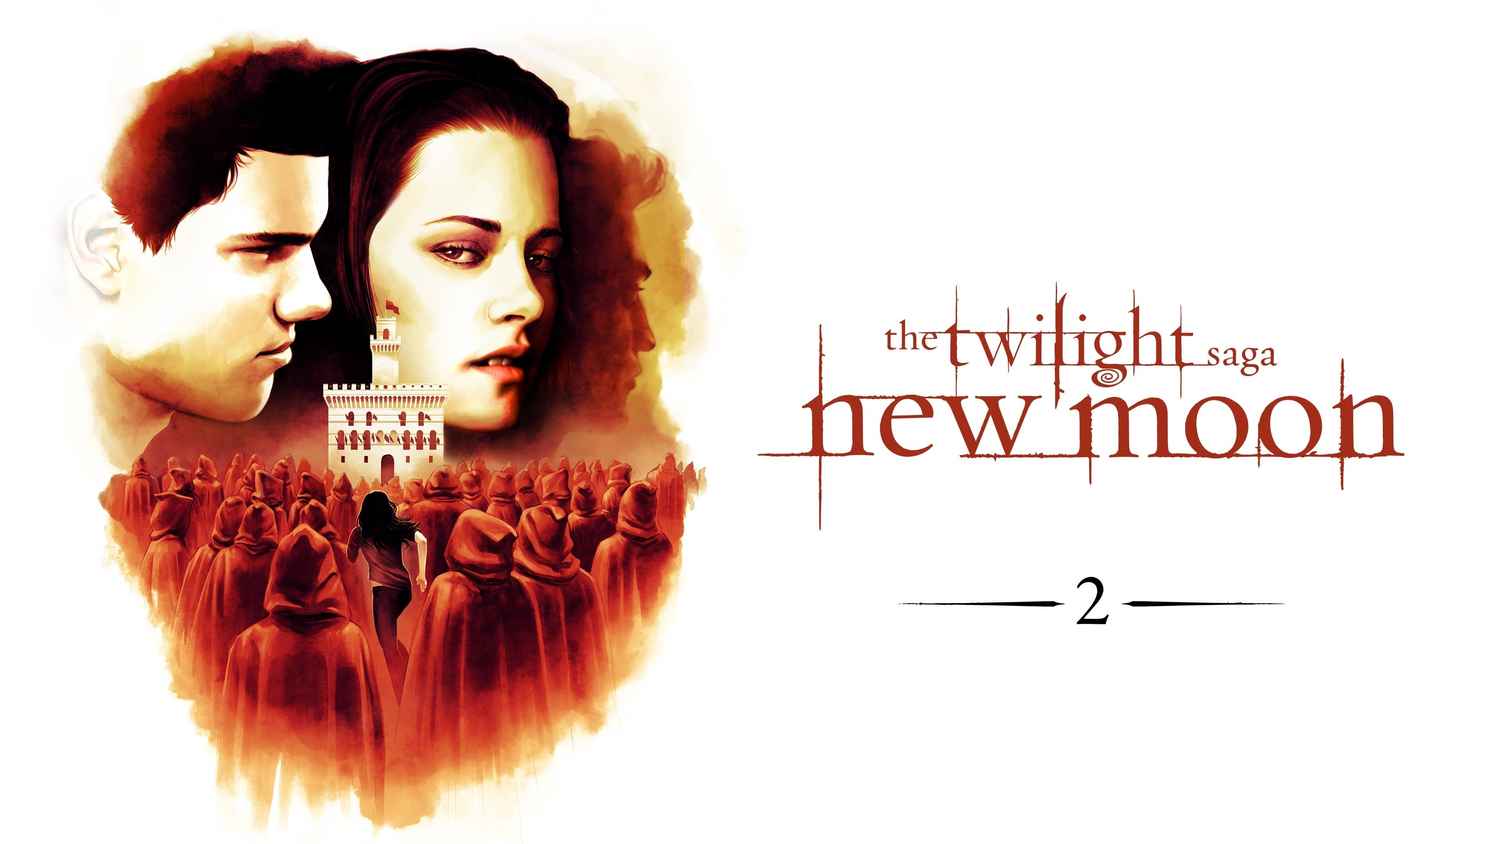 Twilight New Moon Full Movie Free